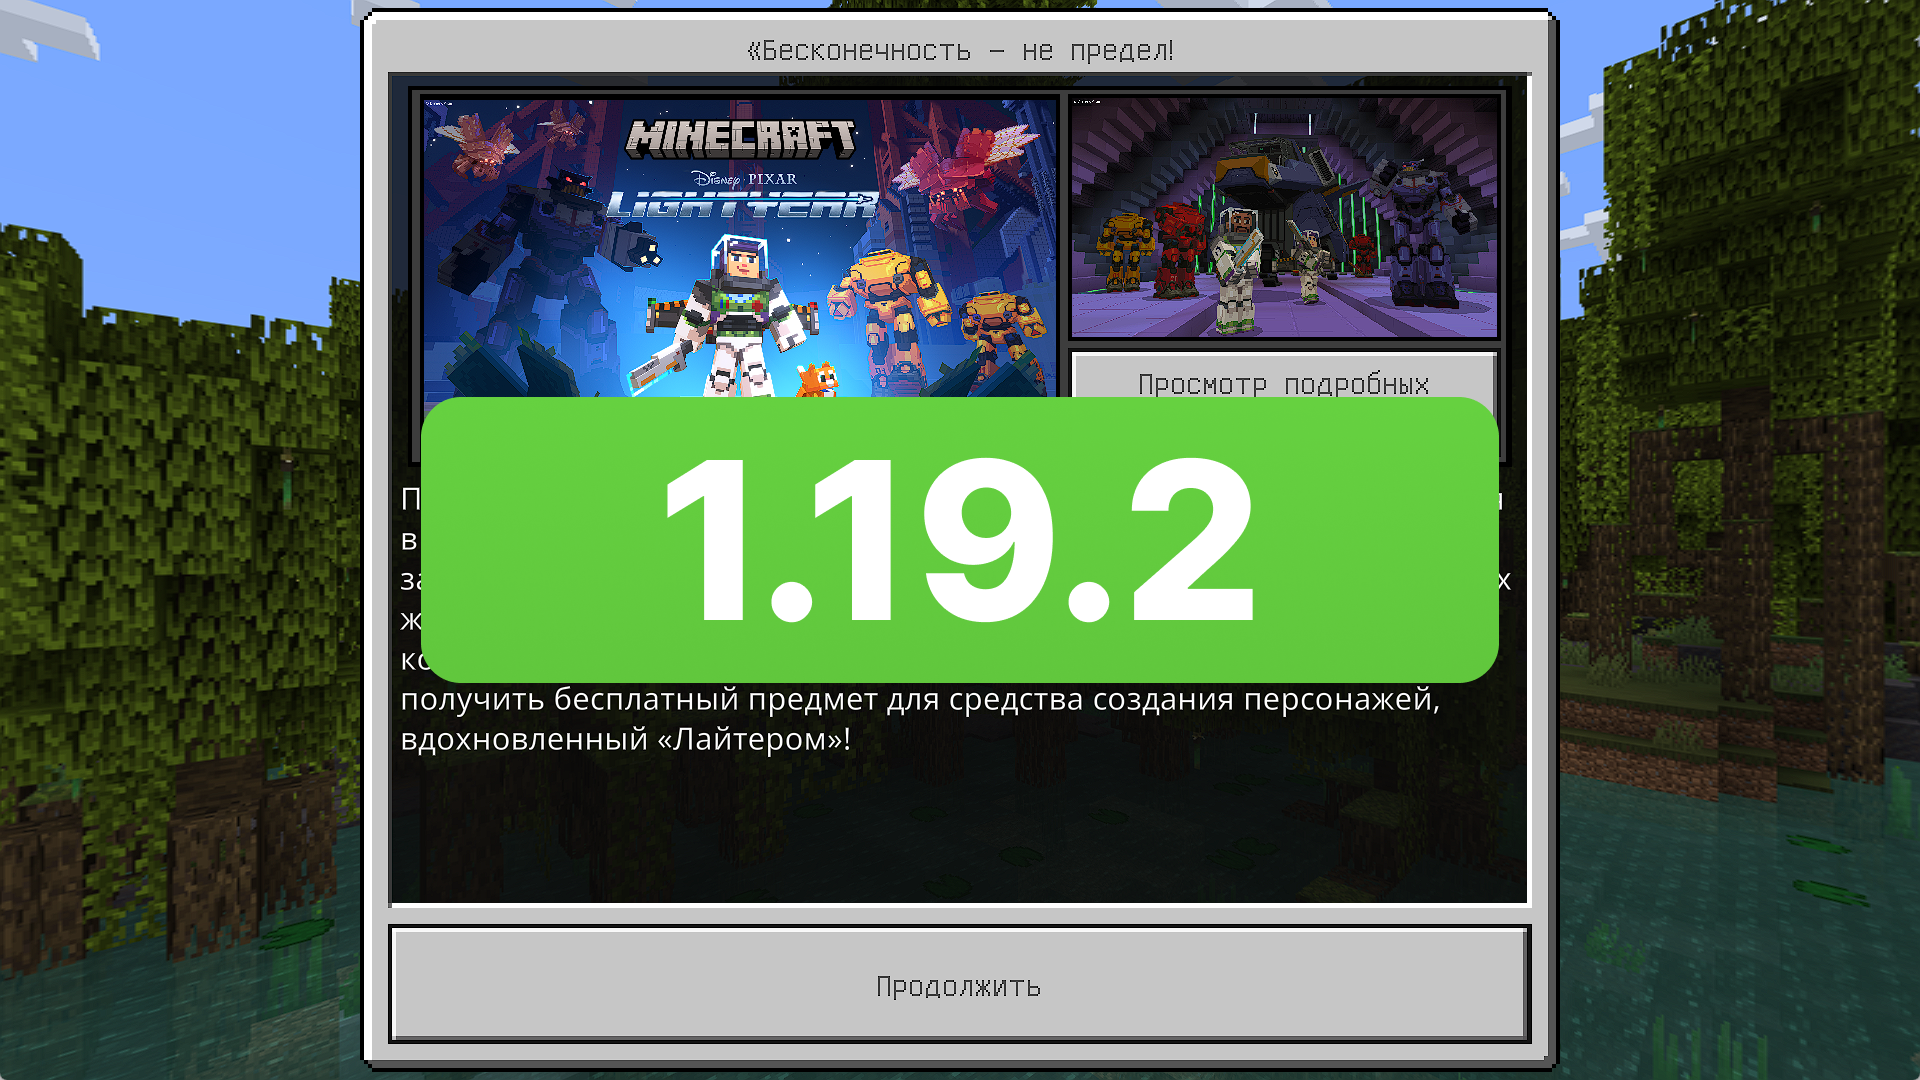 Download Minecraft PE 1.19.2.02